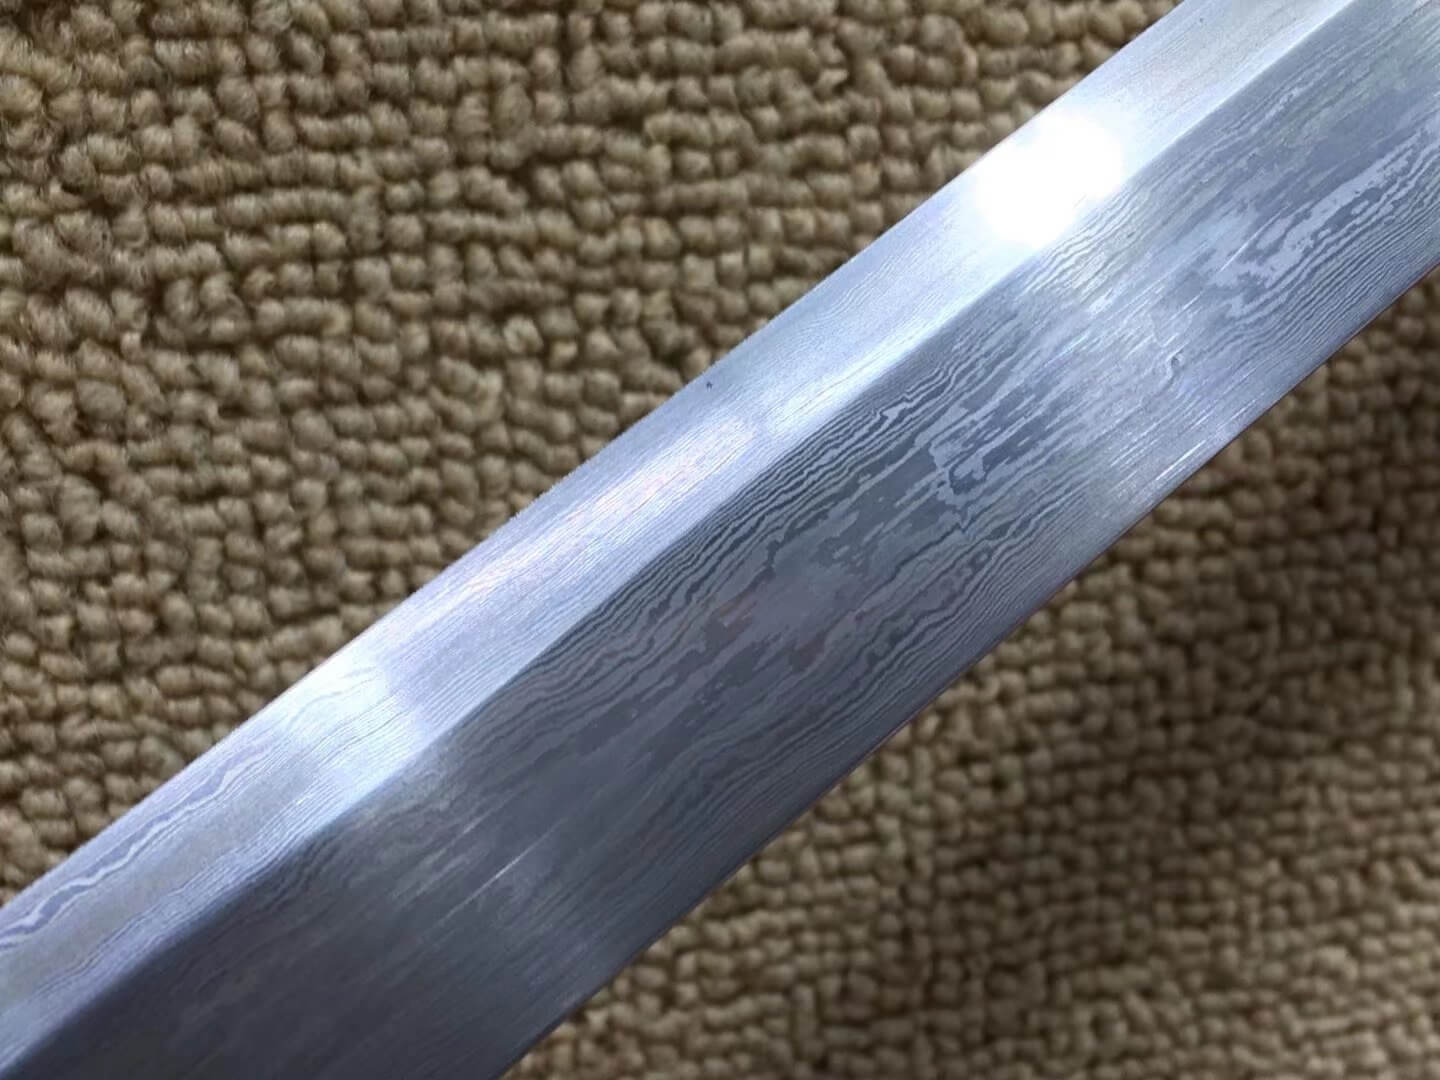 Dagger(Folded steel bade,Ebony scabbard,Brass fittings)Length 20" - Chinese sword shop